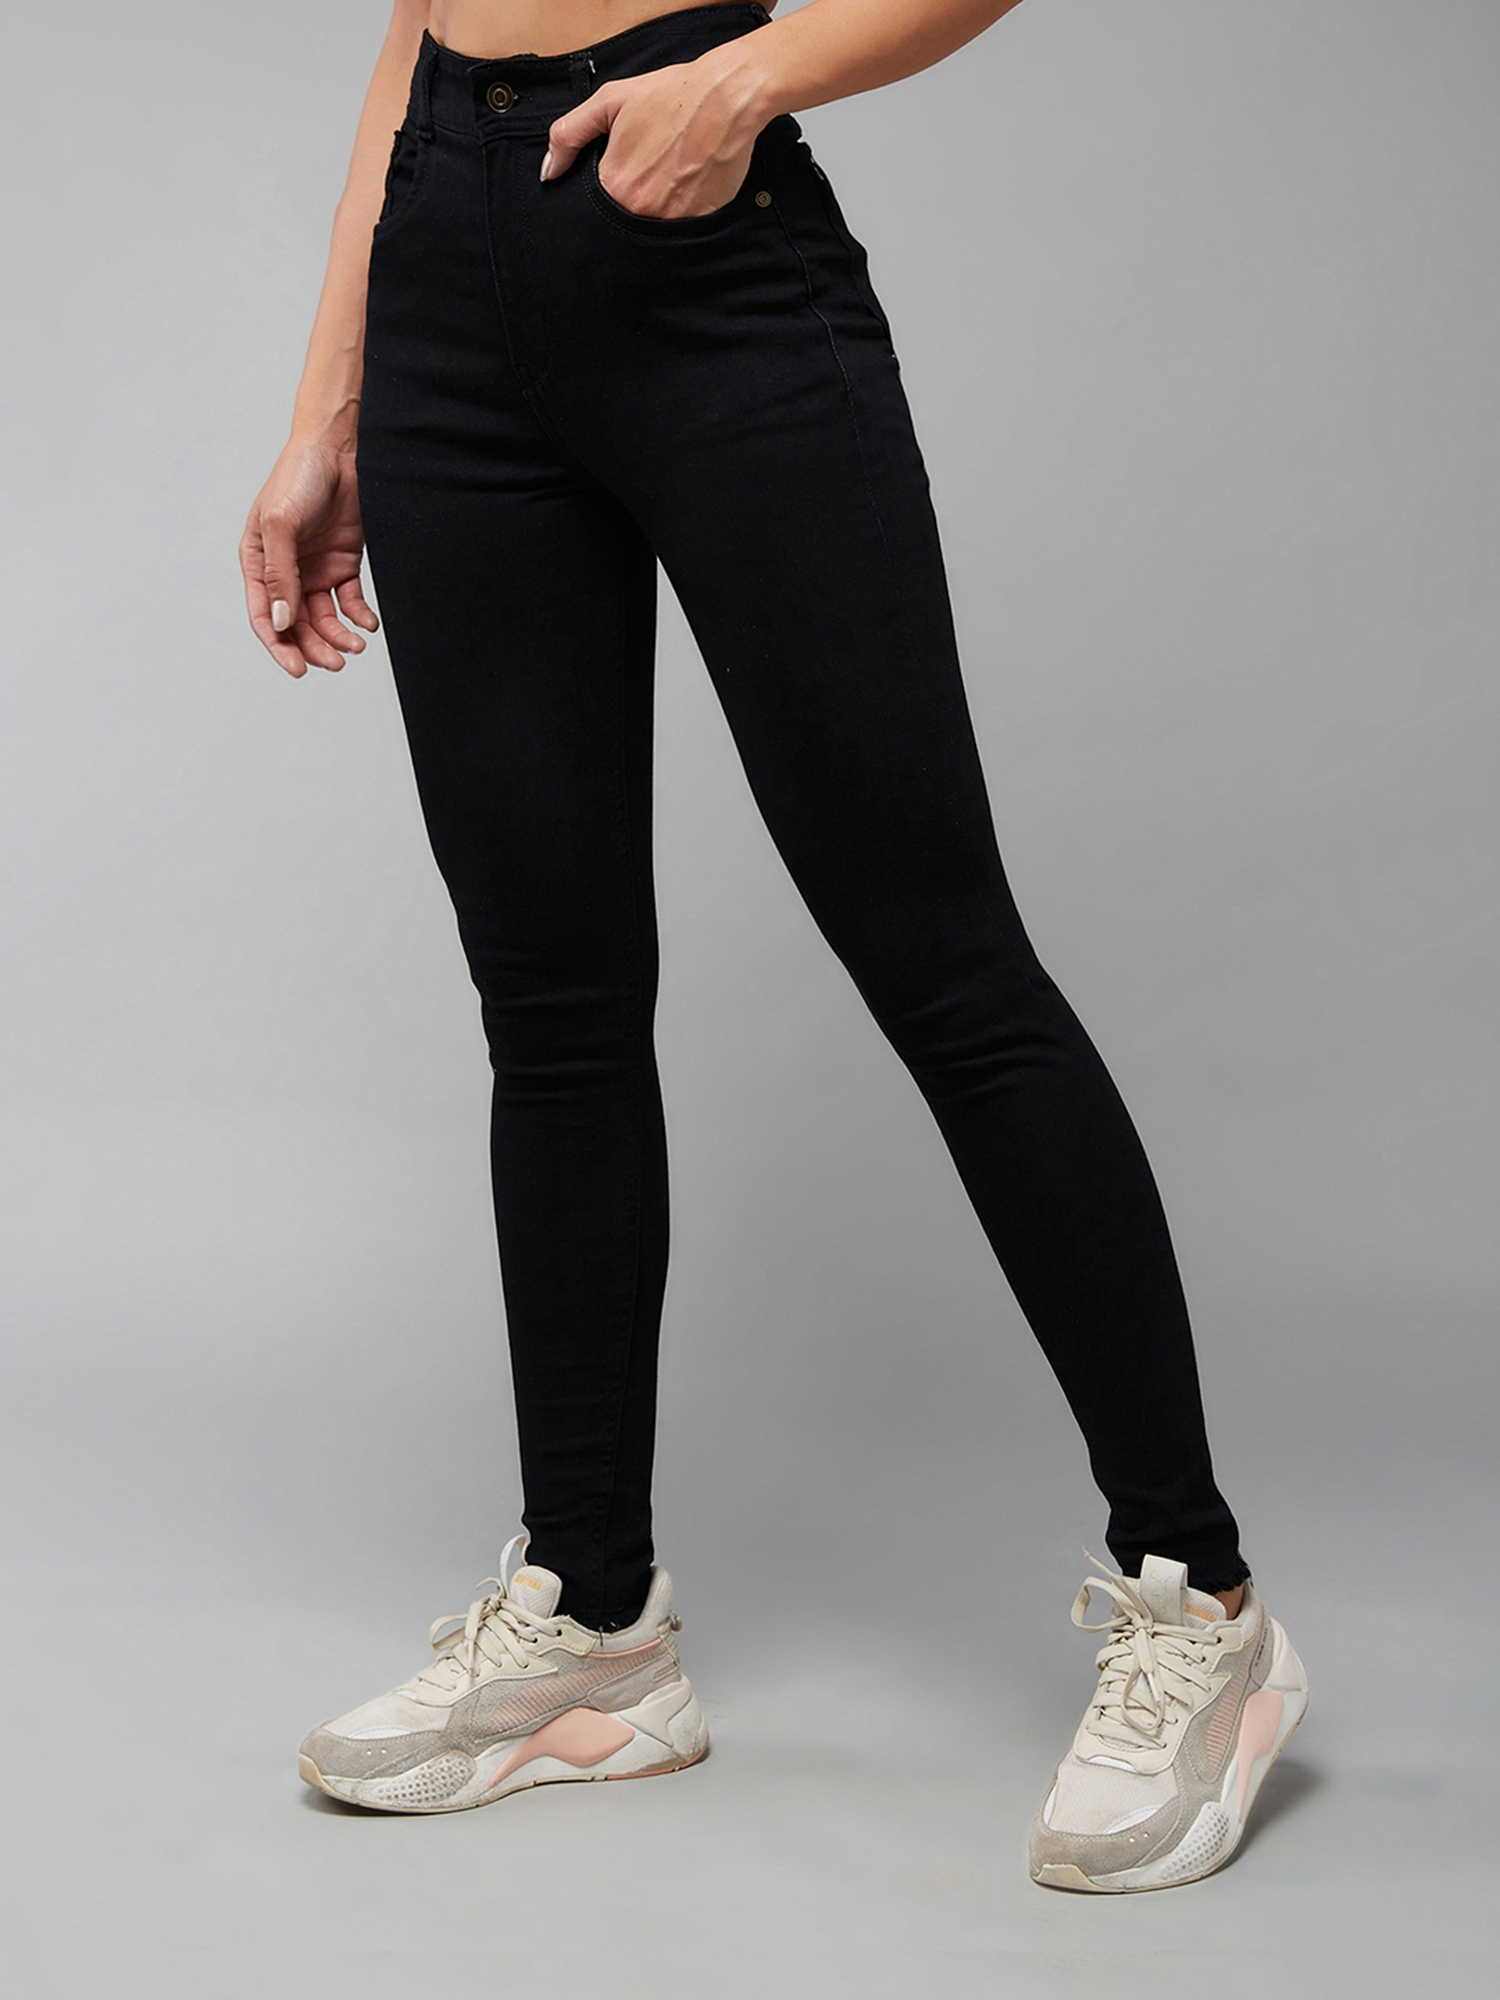 MADAME Slim Fit Black Jeans | Buy SIZE 36 Denim Online for | Glamly